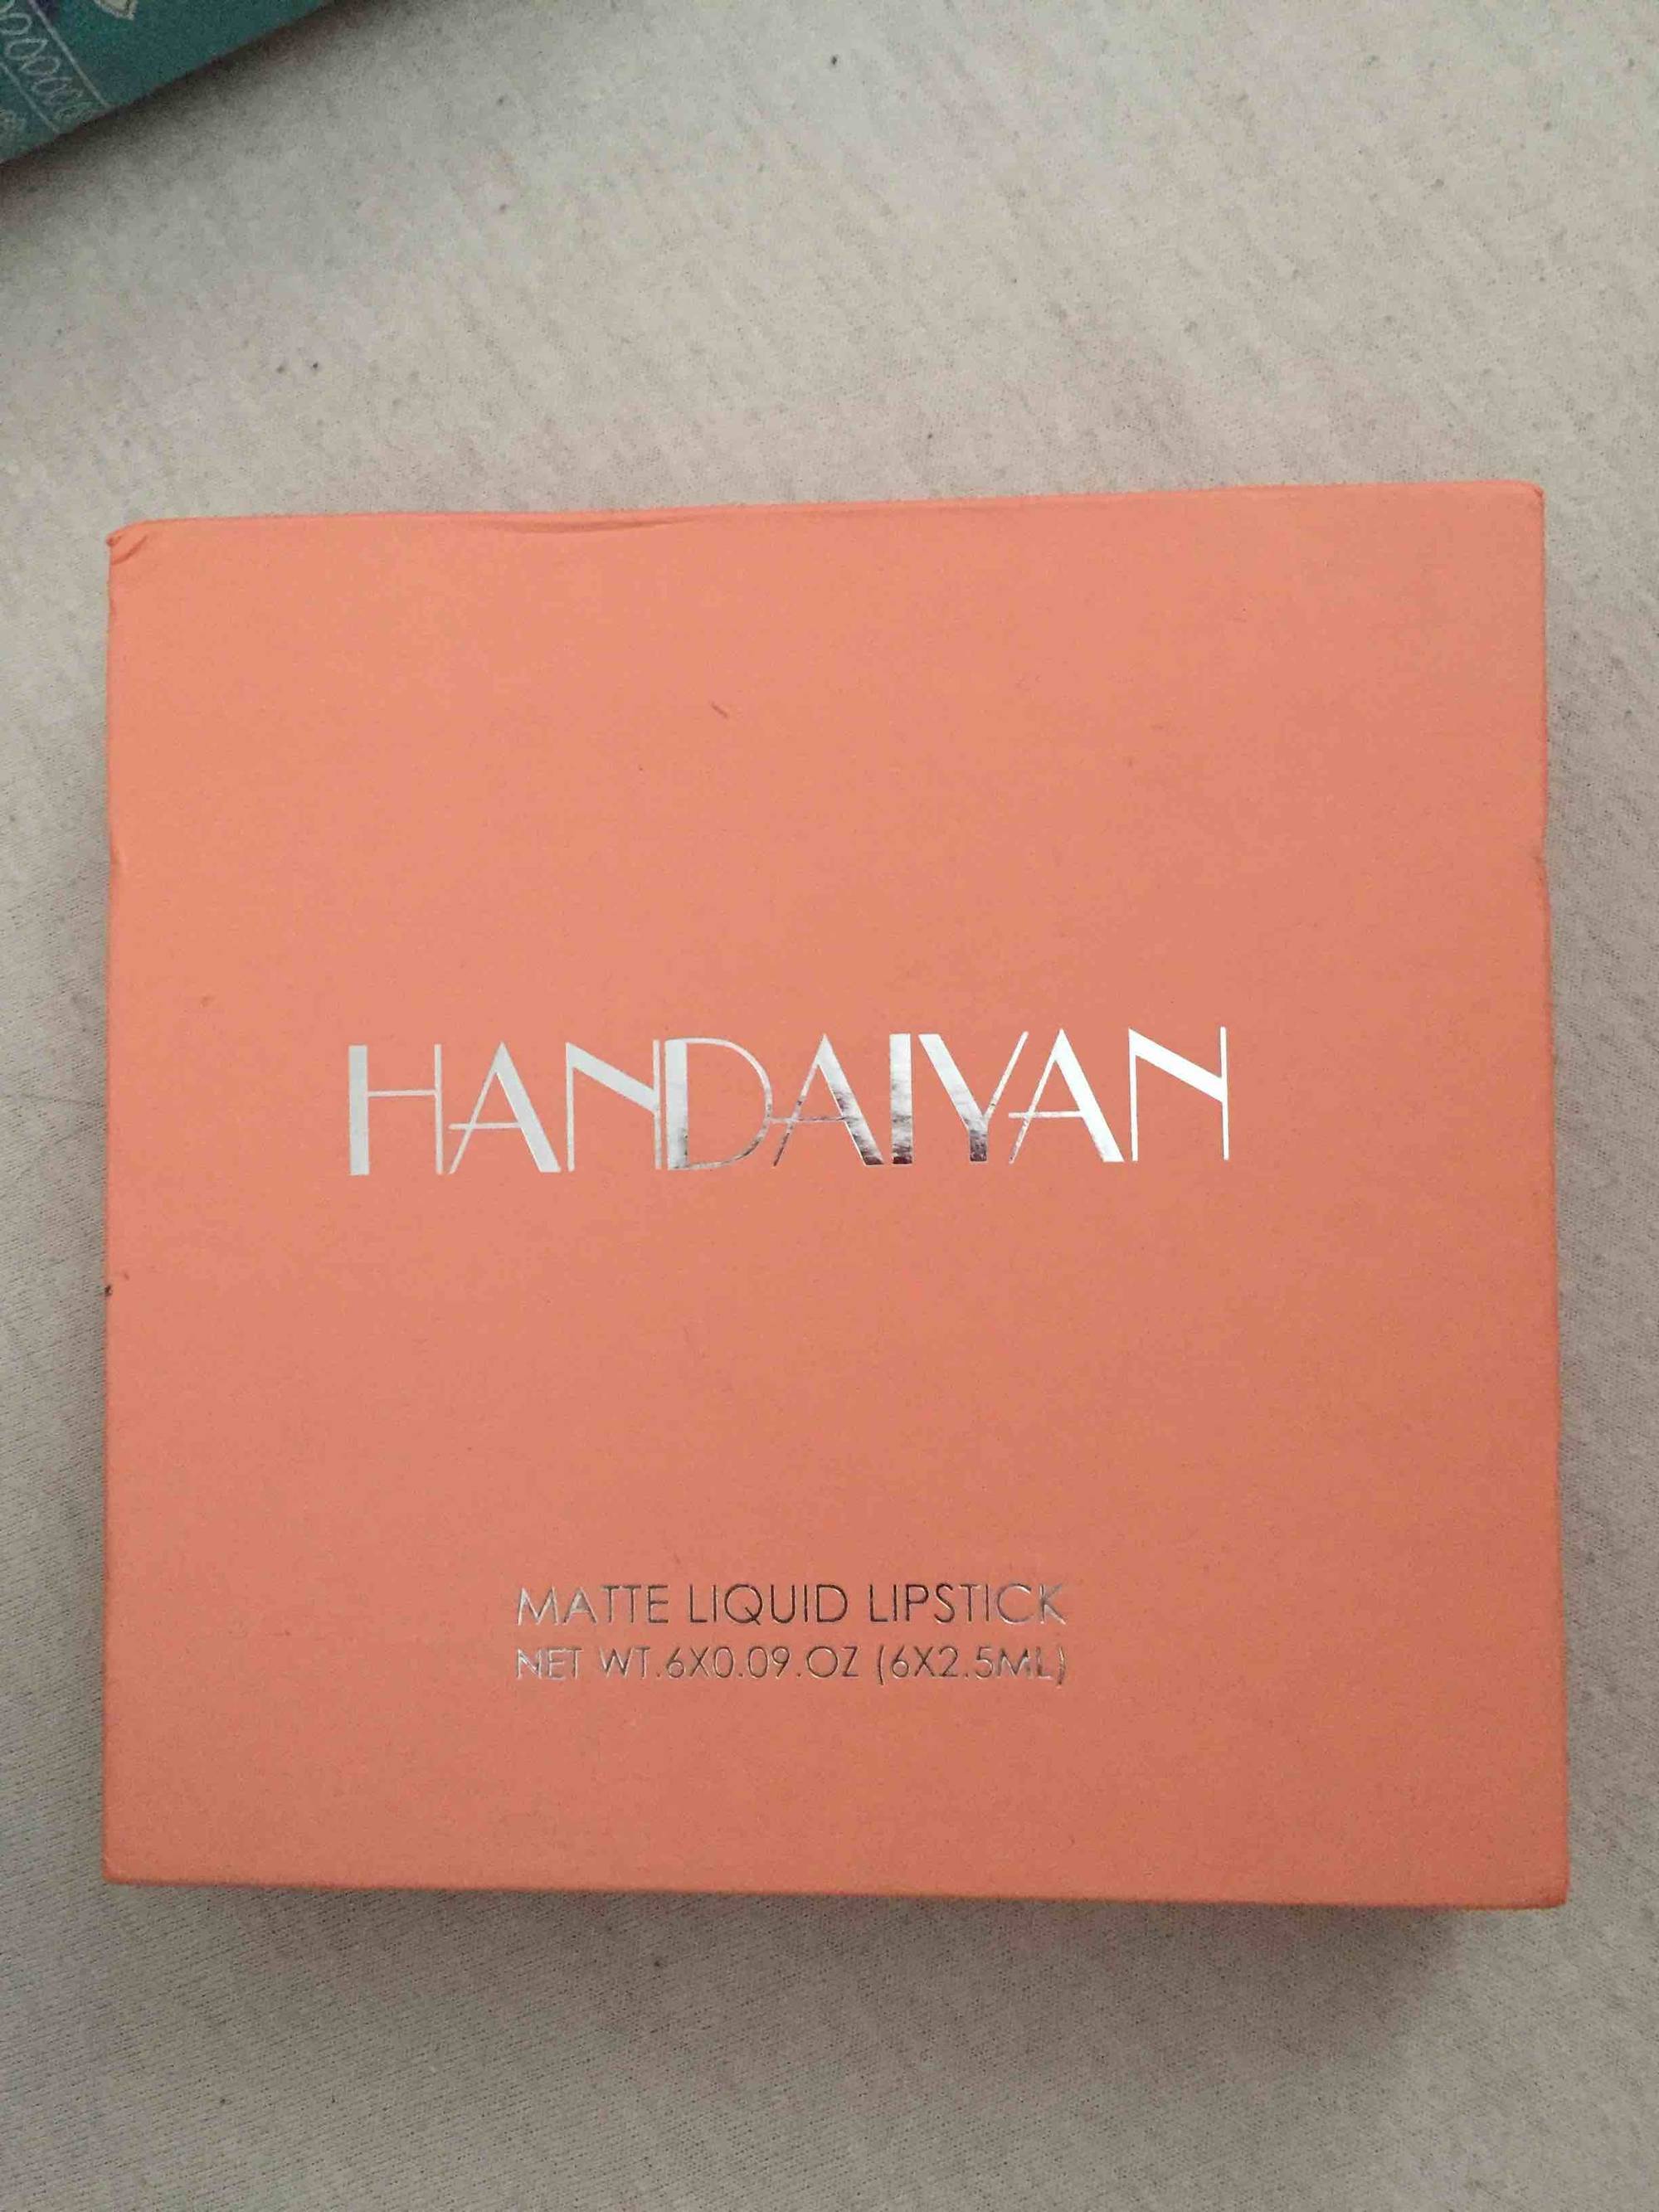 HANDAIYAN - Matte liquid lipstick